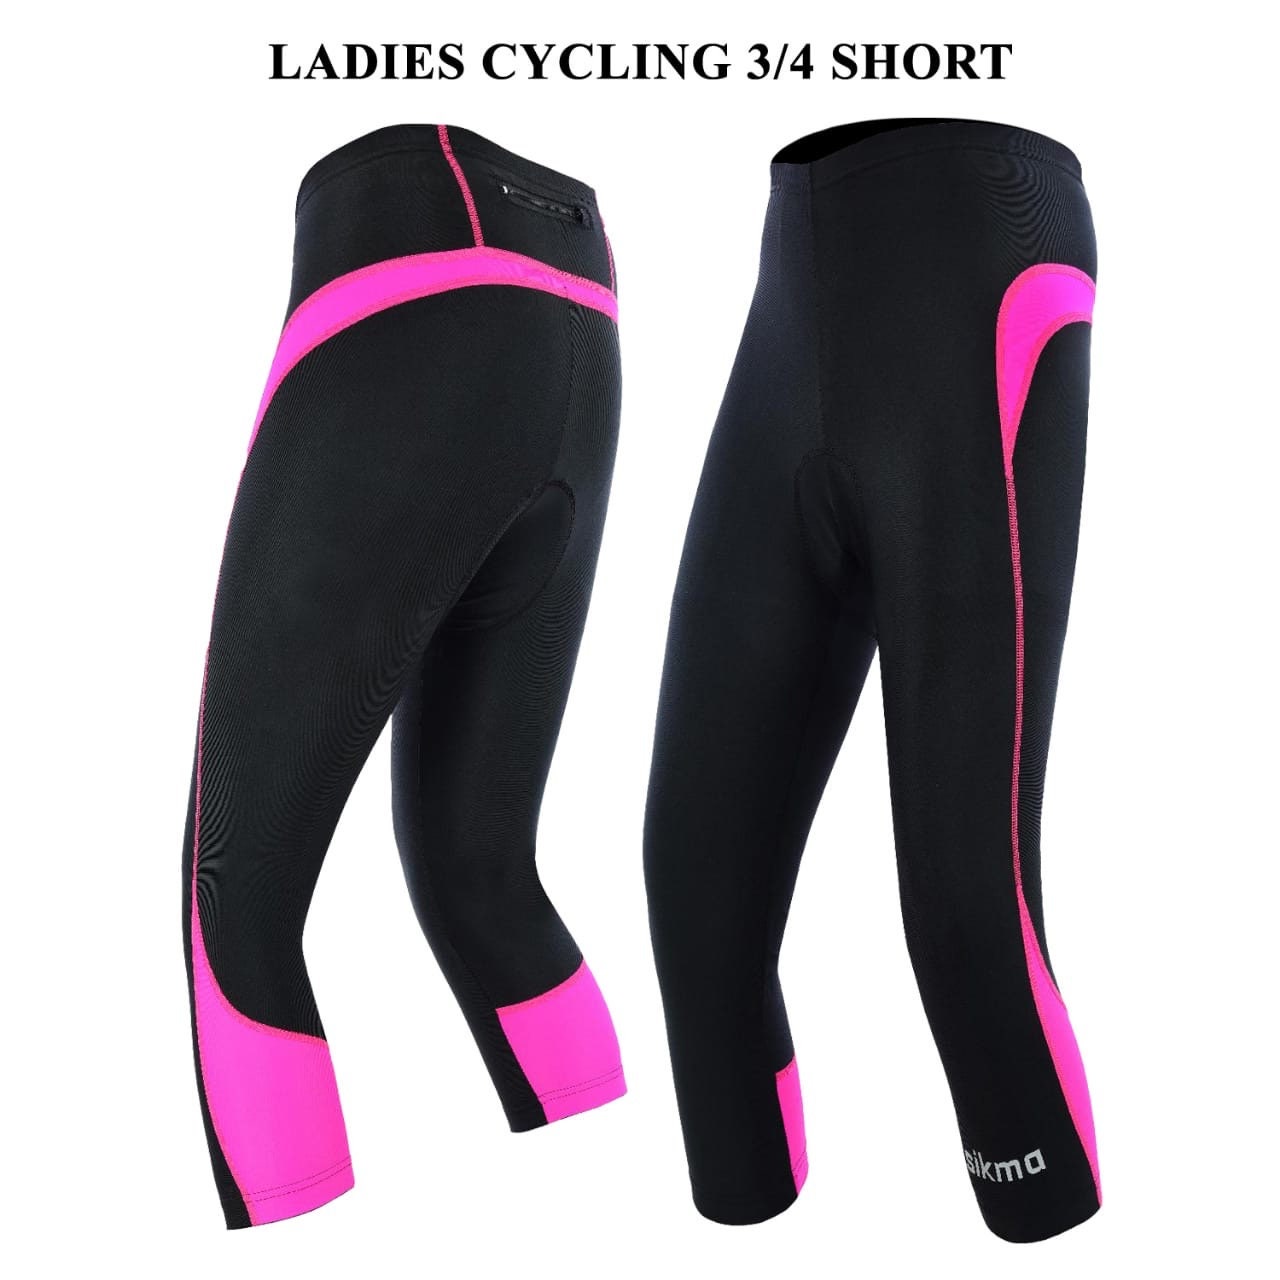 Buy Women Cycling Tights 3/4 Shorts Padded Ladies Leggings Cool